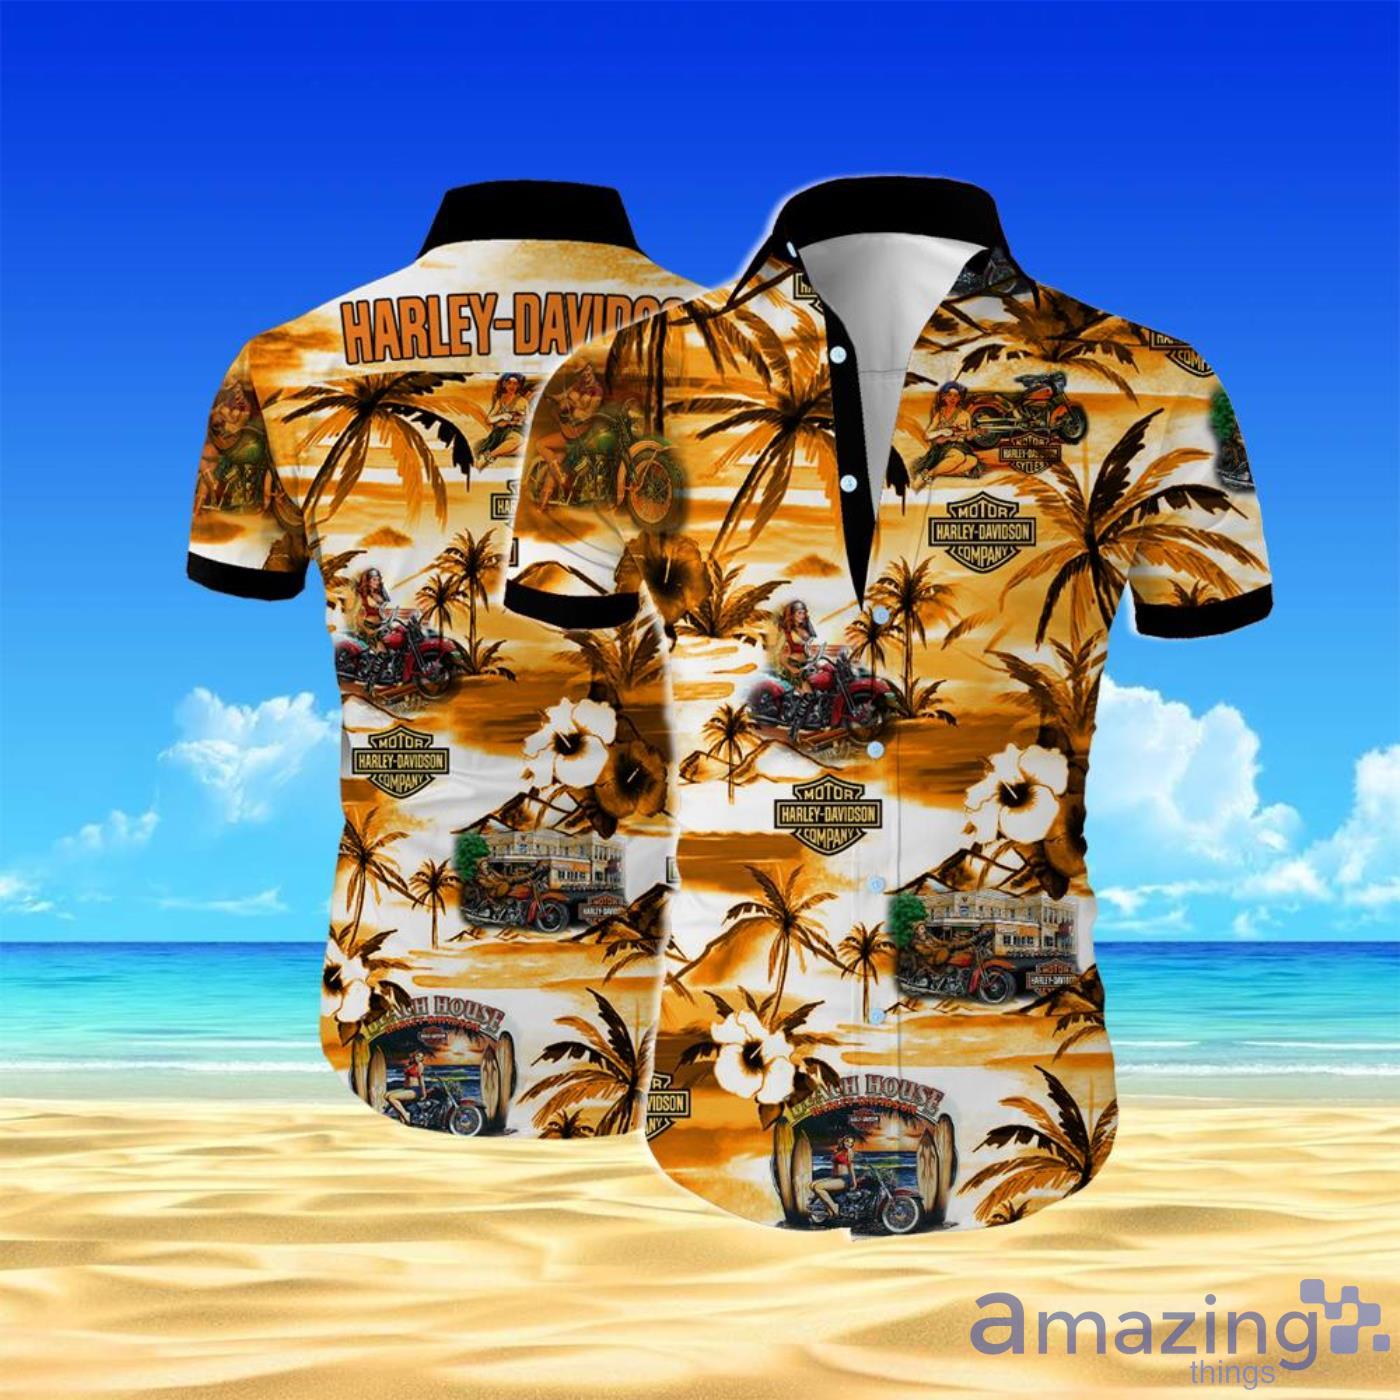 Harley-davidson Tropical Beach Short Sleeves Hawaiian Shirt Product Photo 1